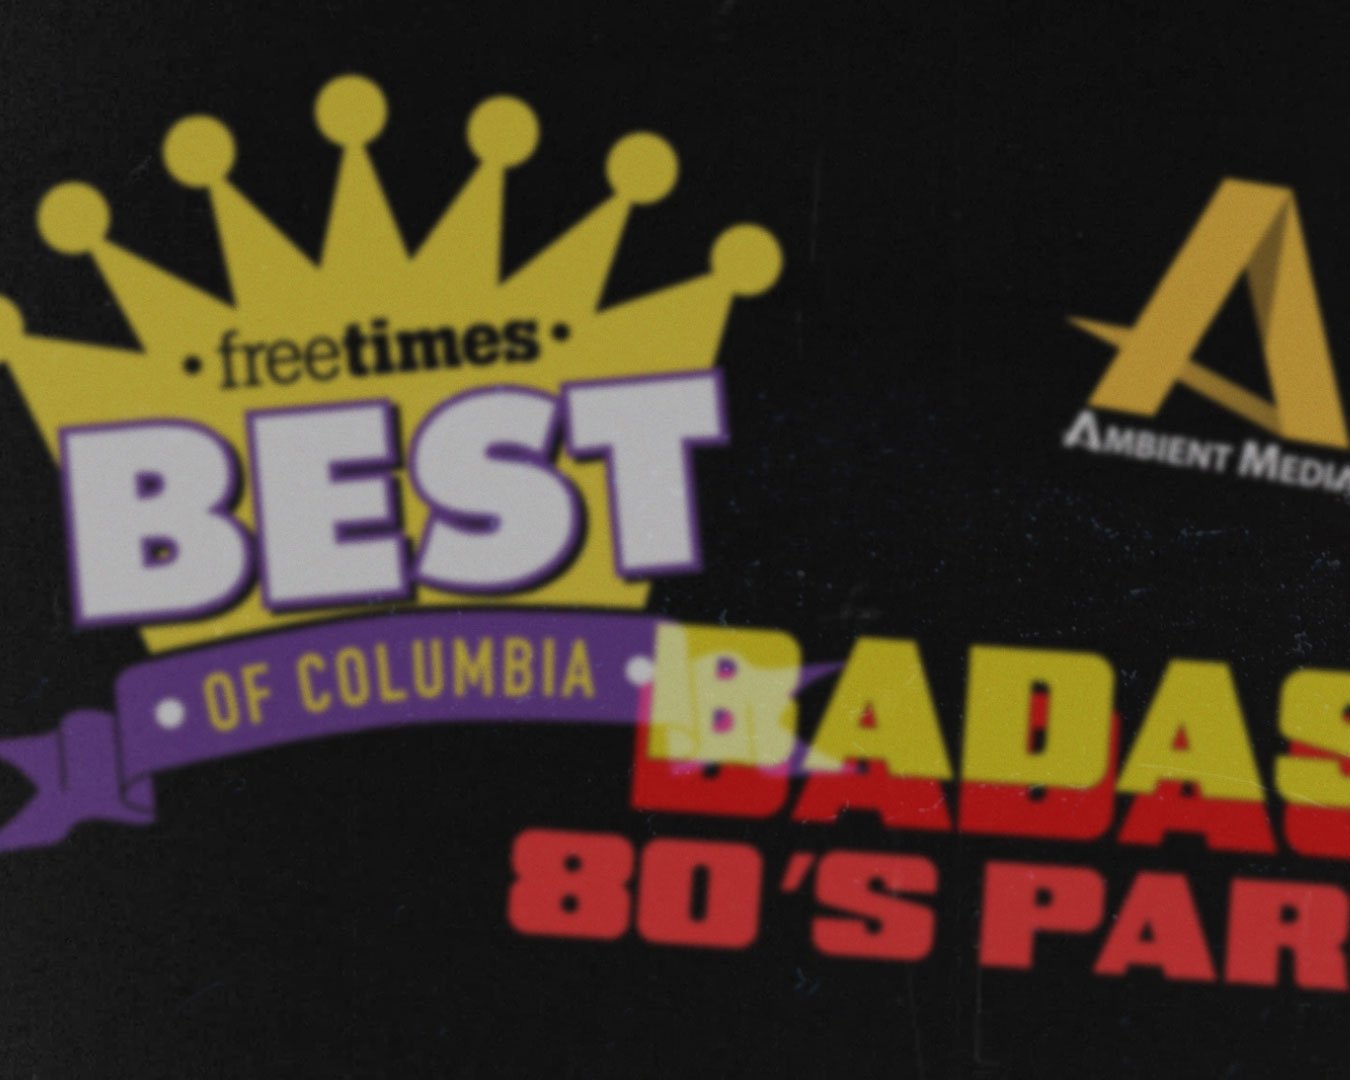 FreeTimes 2017 Best of Columbia Retro Video